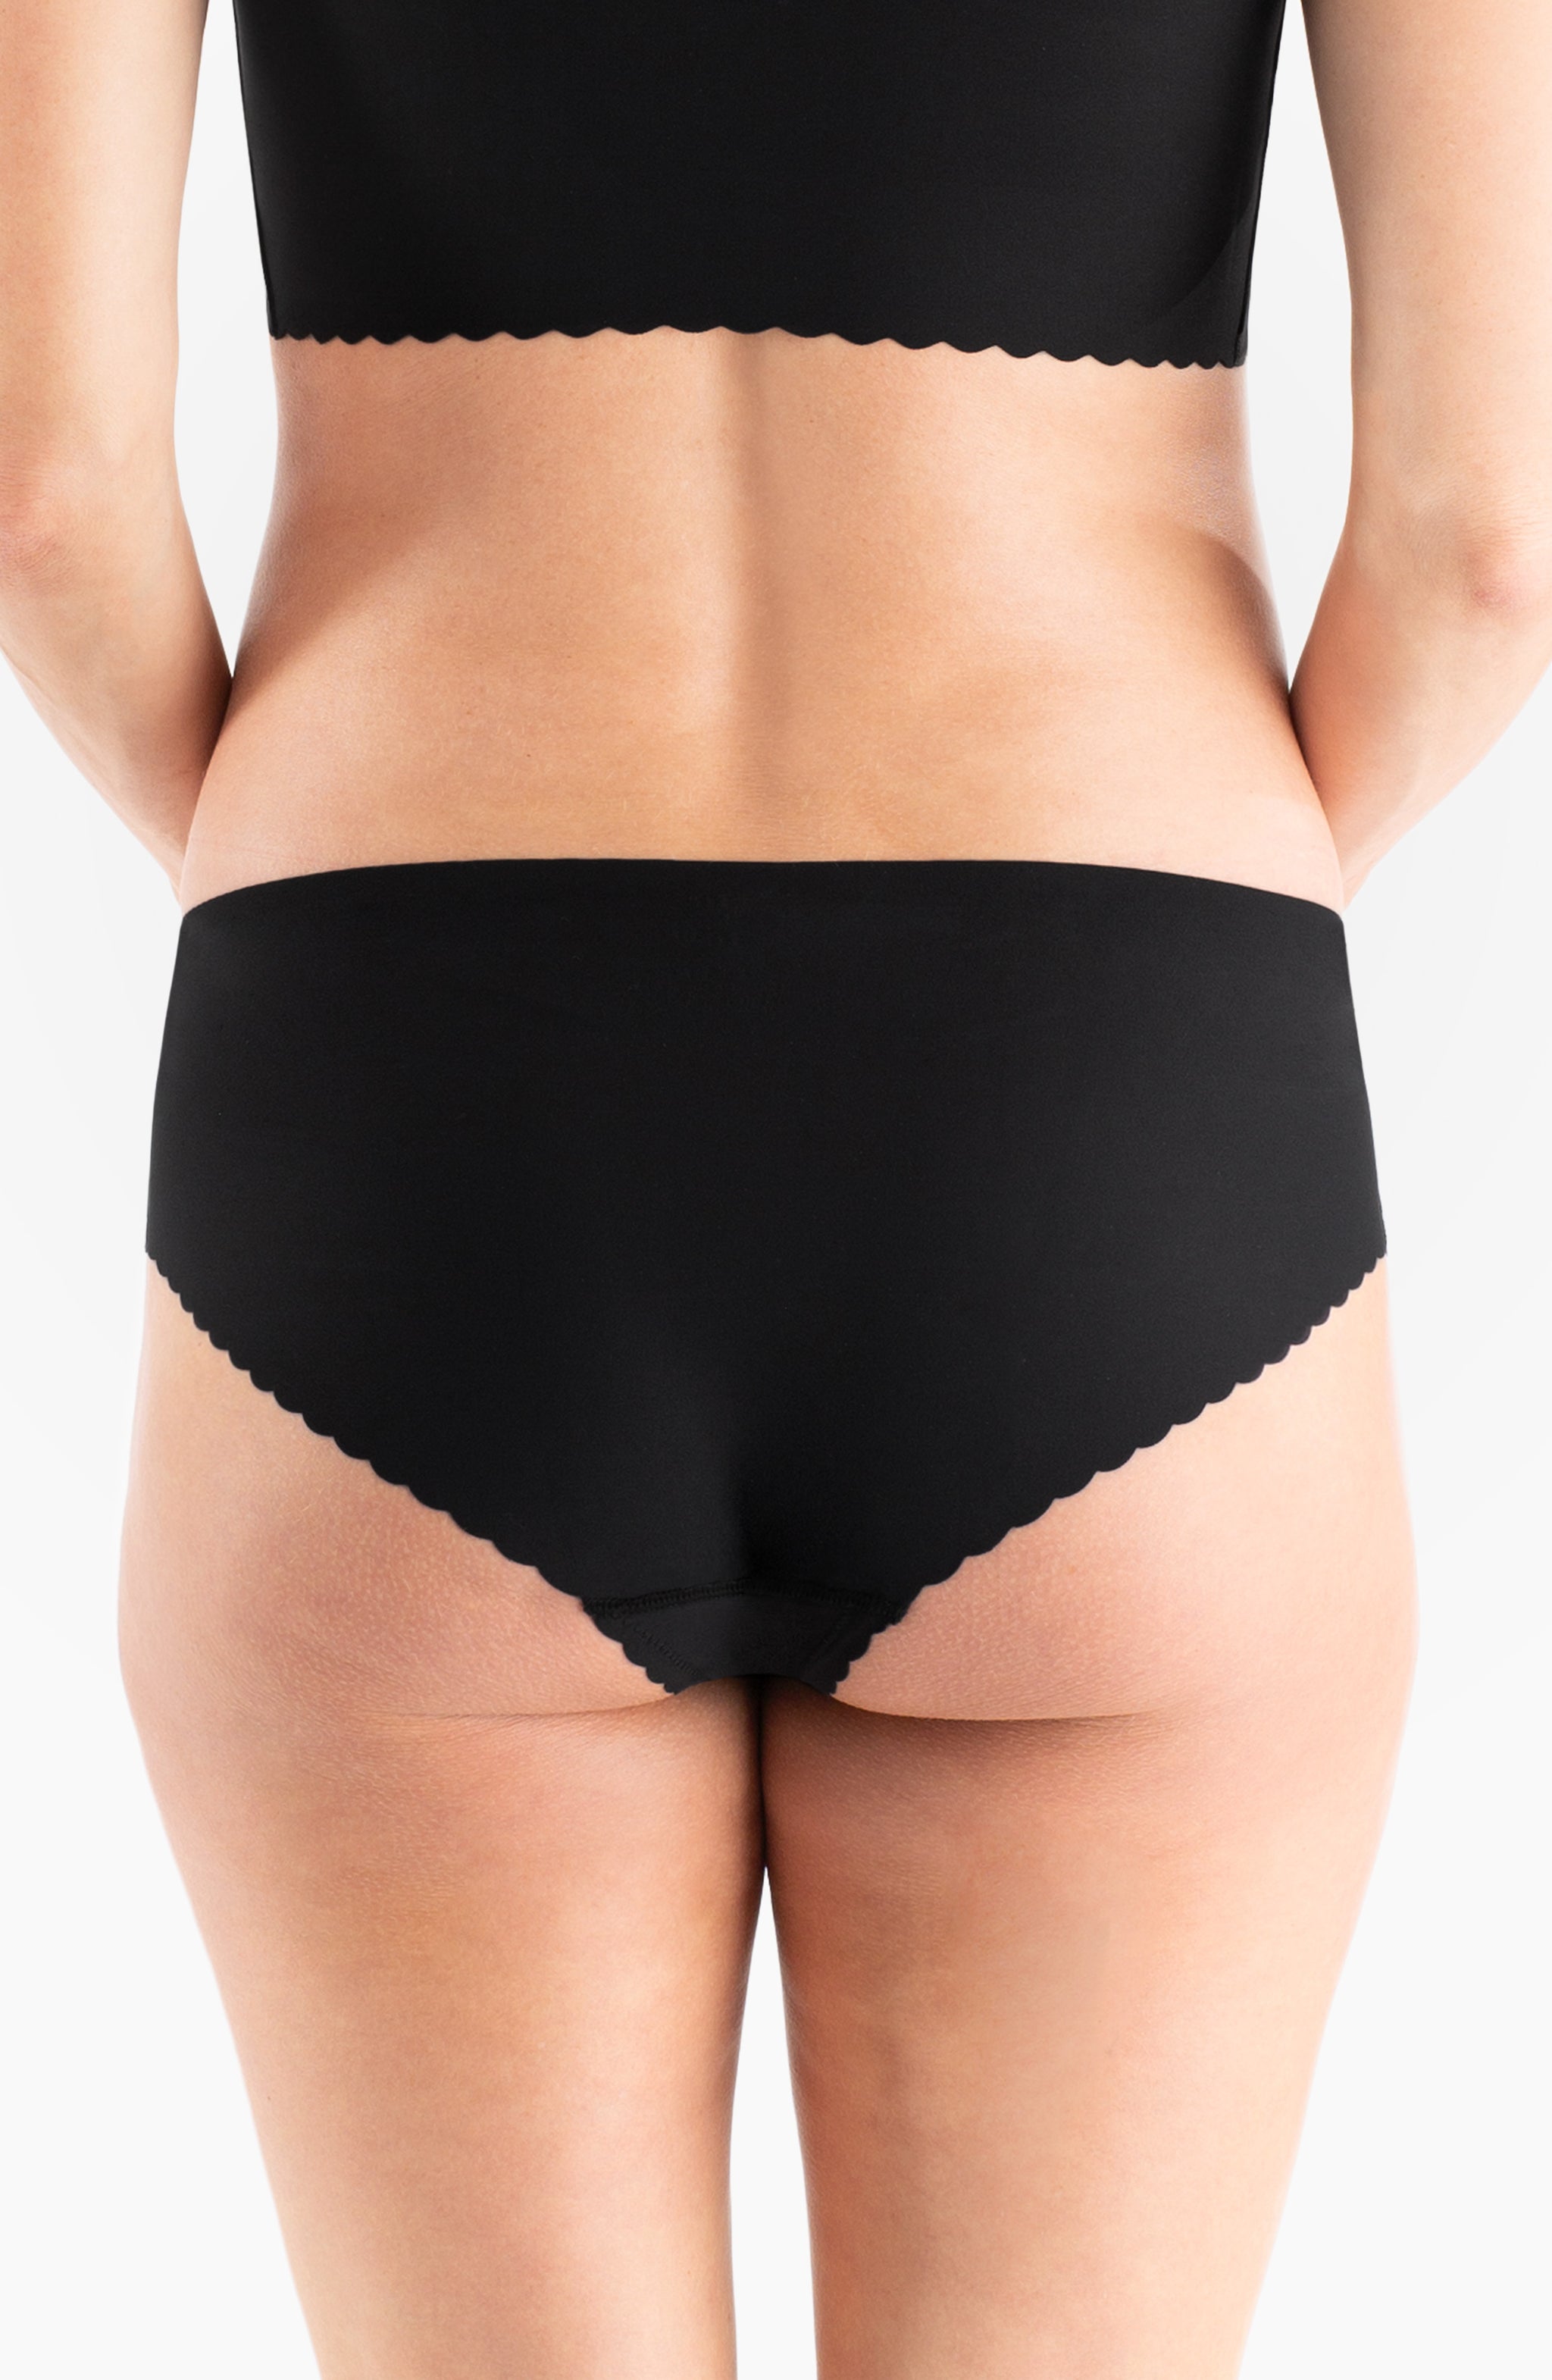 Buy Intimate Portal Foldable Under Bump Maternity Underwear Women Pregnancy  Panties 6-Pk Black Beige Gray Stripes Small at